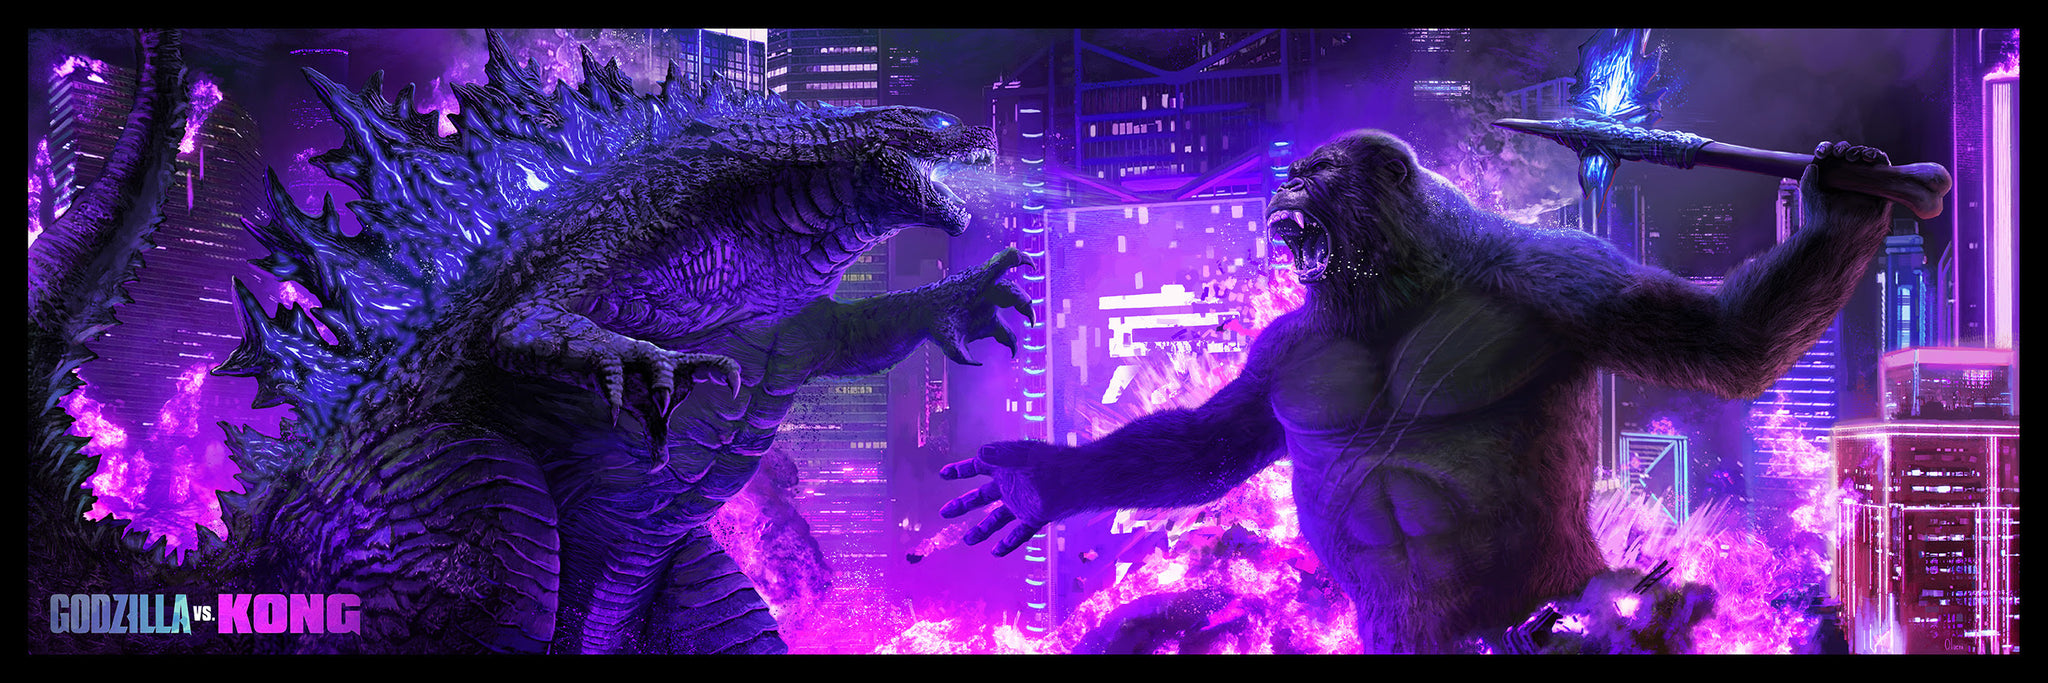 Godzilla vs. Kong Neon Variant